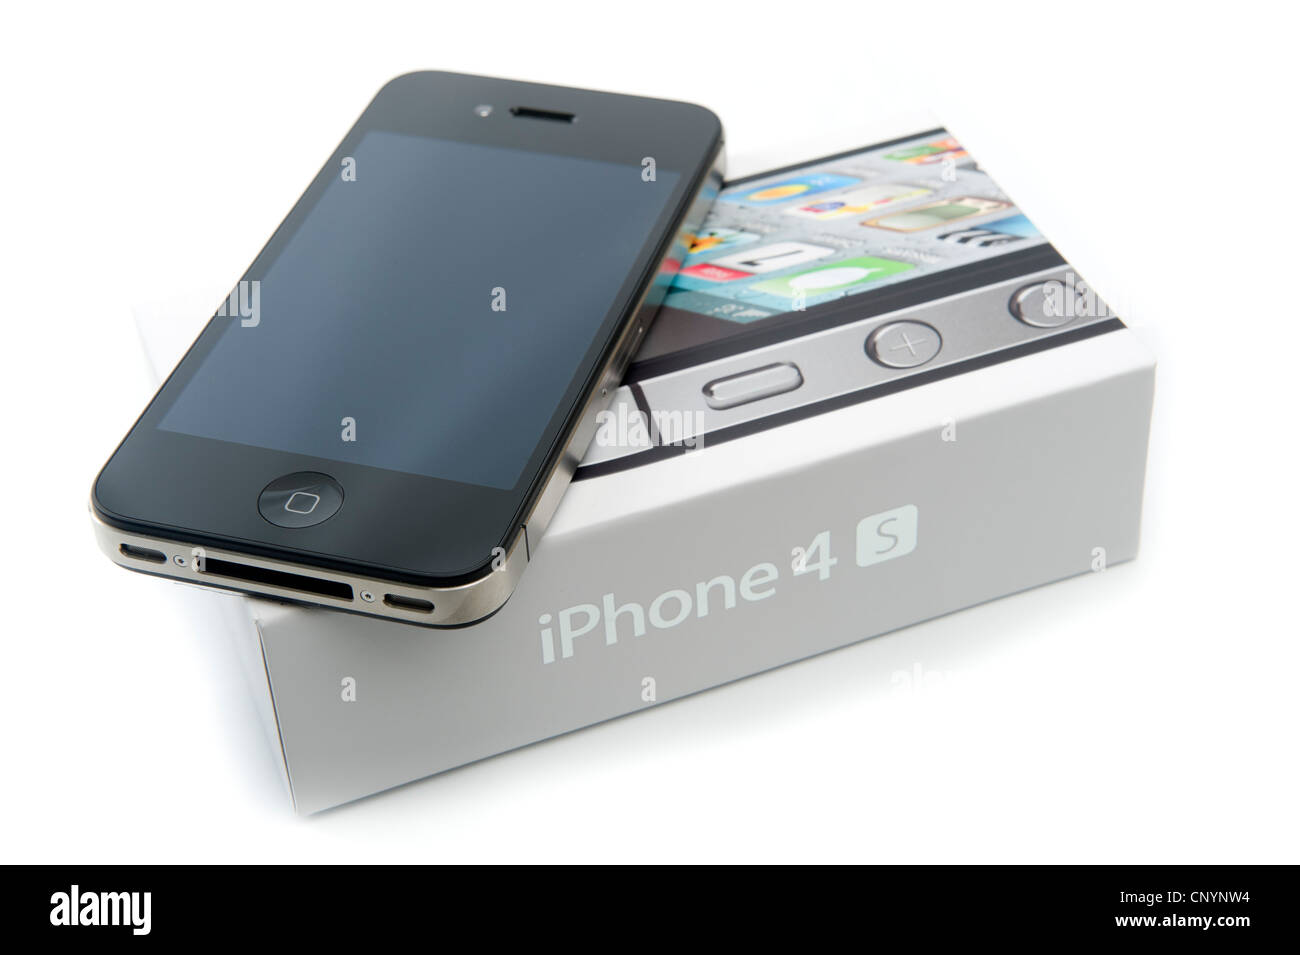 Apple iPhone 4S with retail box Stock Photo - Alamy